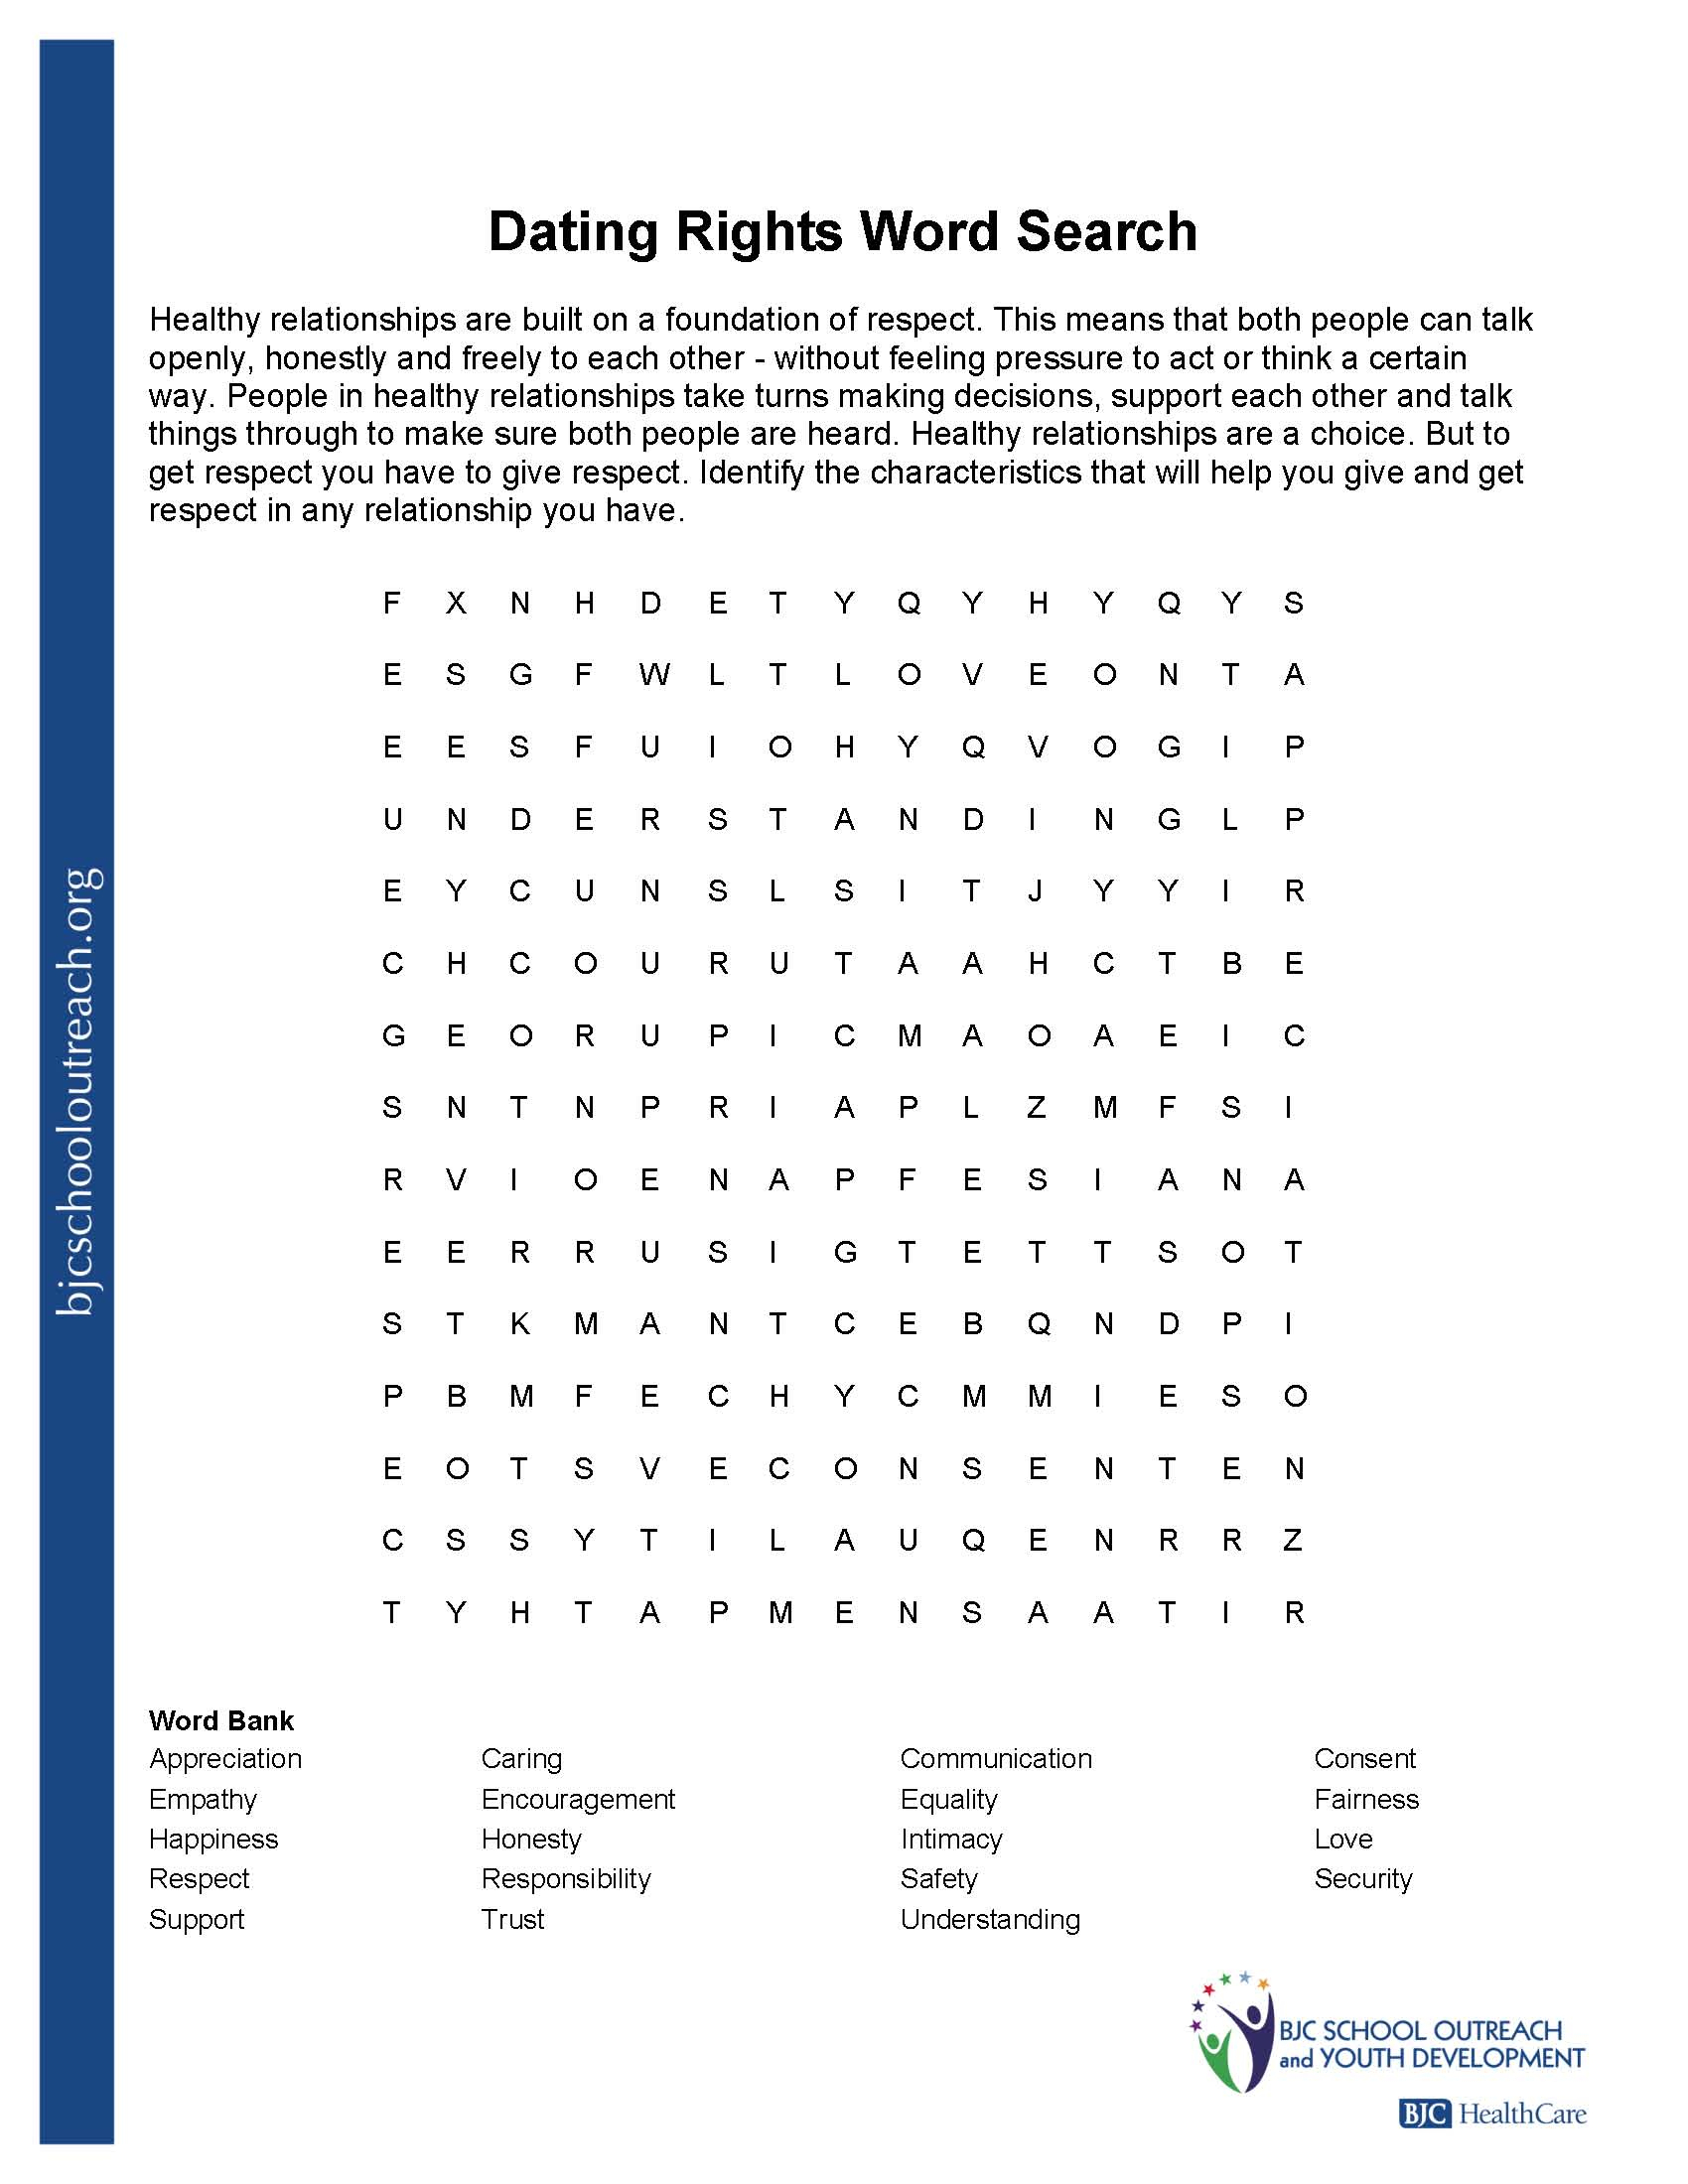 Printable Worksheets - Printable Stress Management Crossword Puzzle